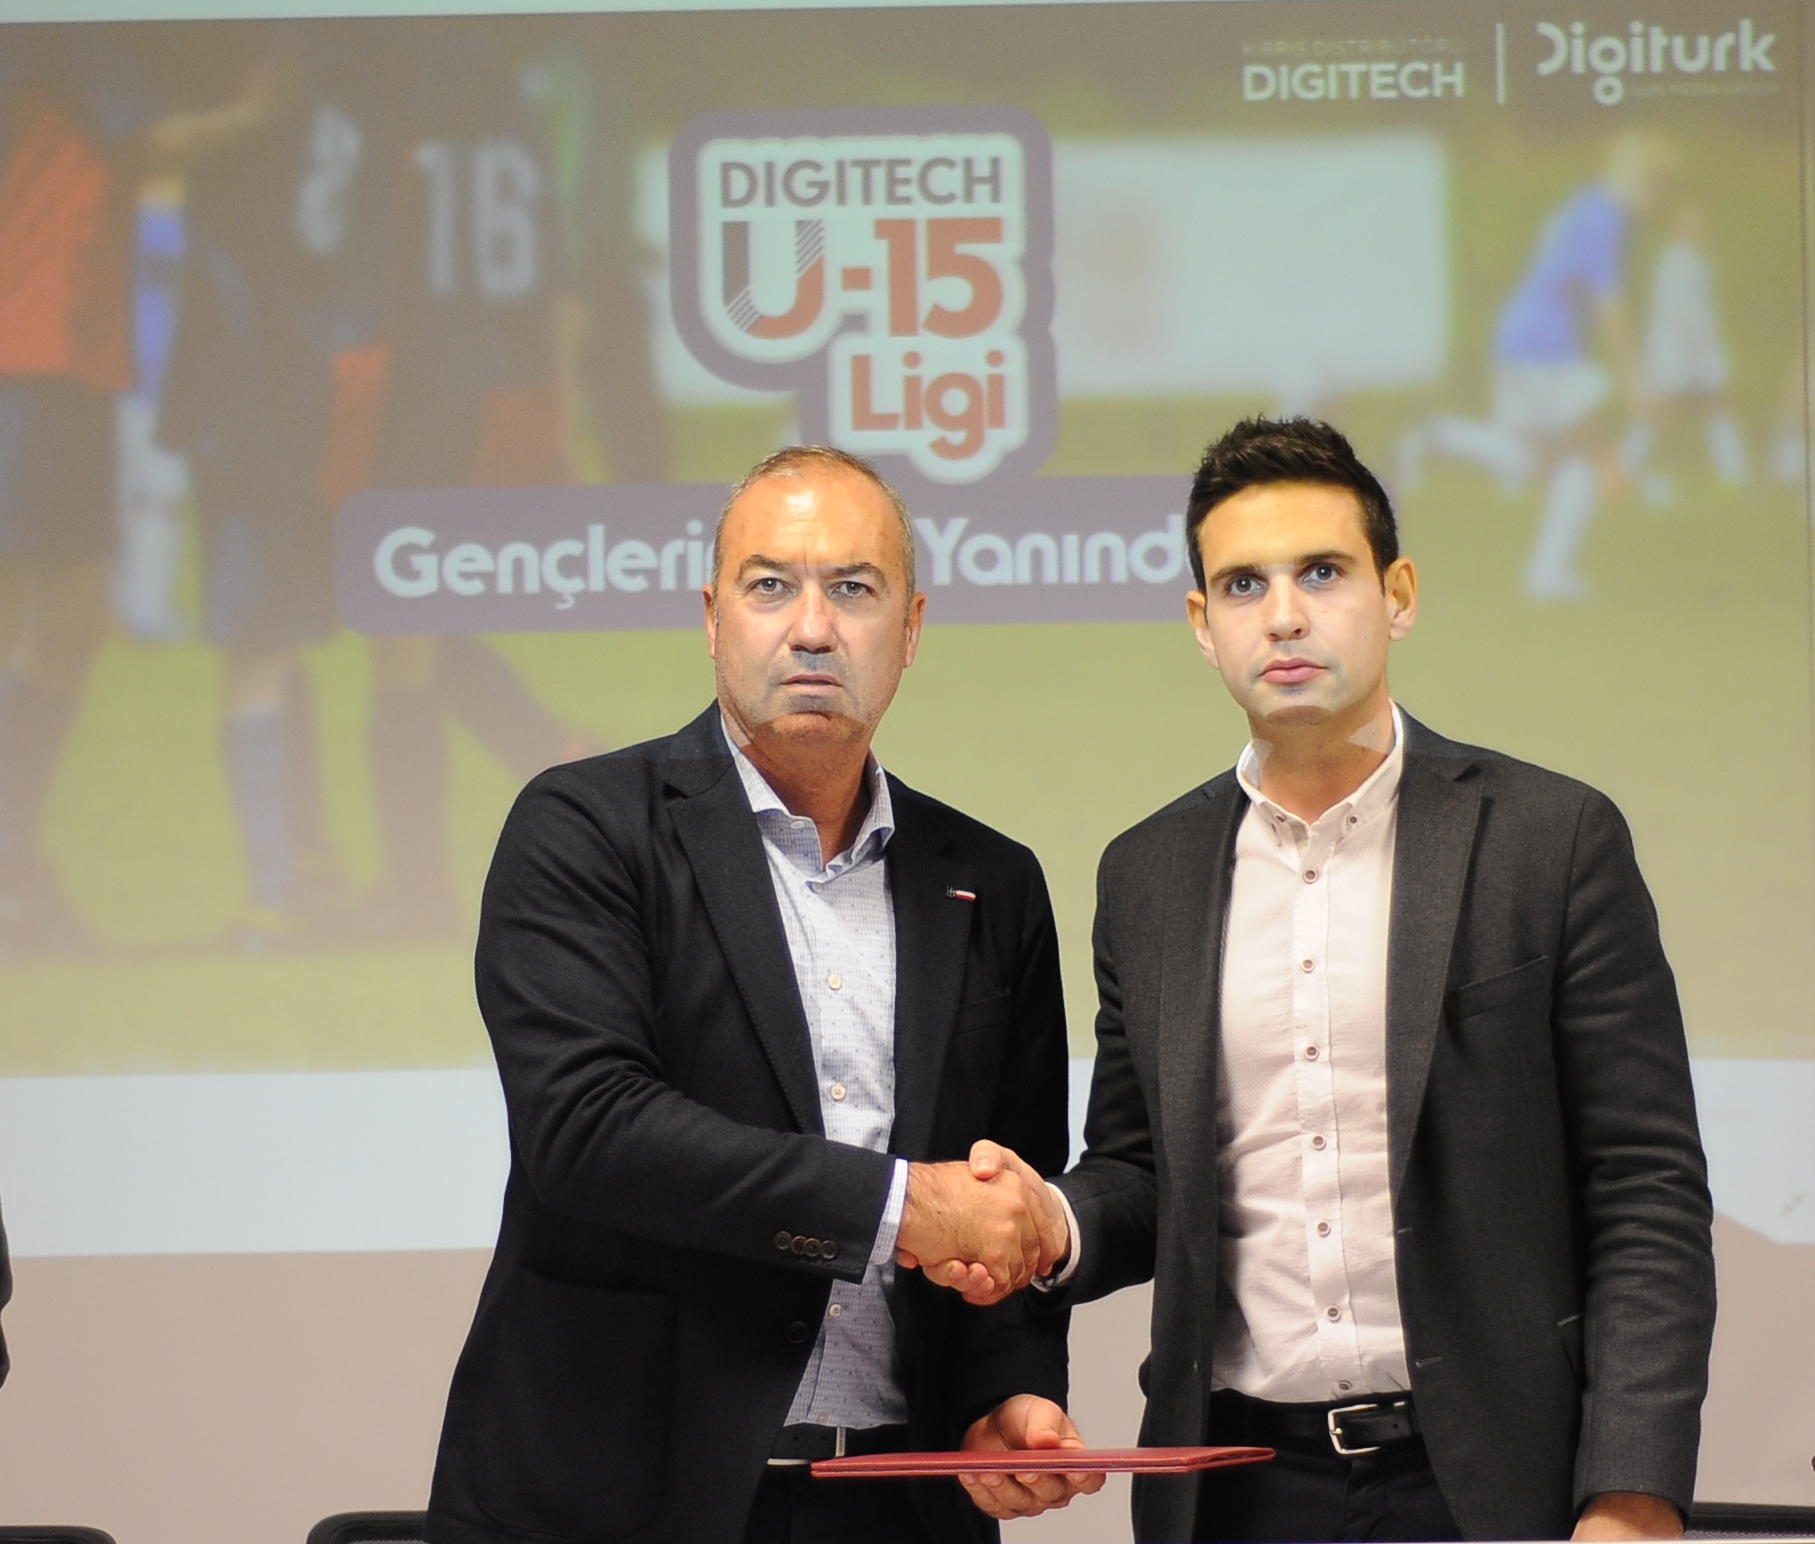 U15 Ligi'nin sponsoru DIGITECH oldu